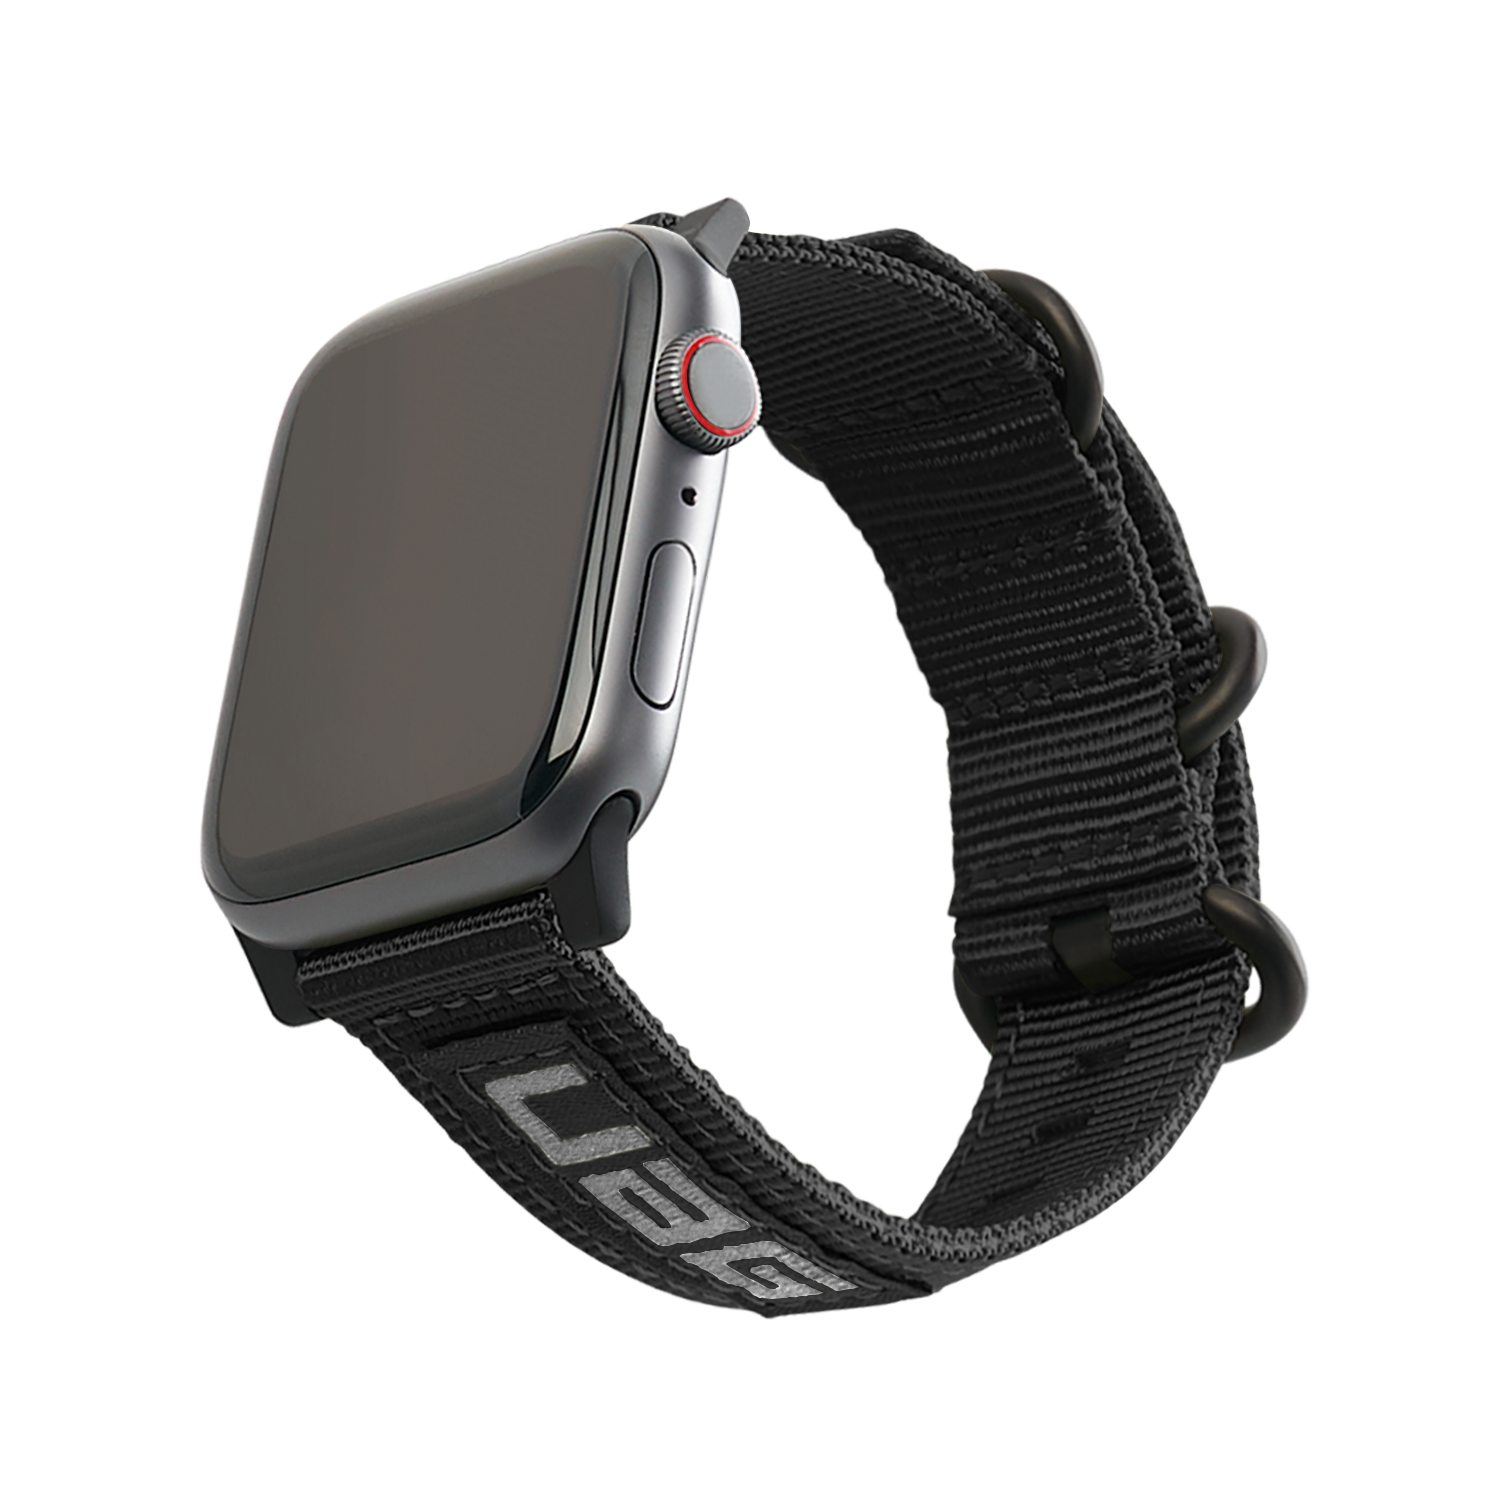 Nato Eco Strap Apple Watch SE 40mm Black